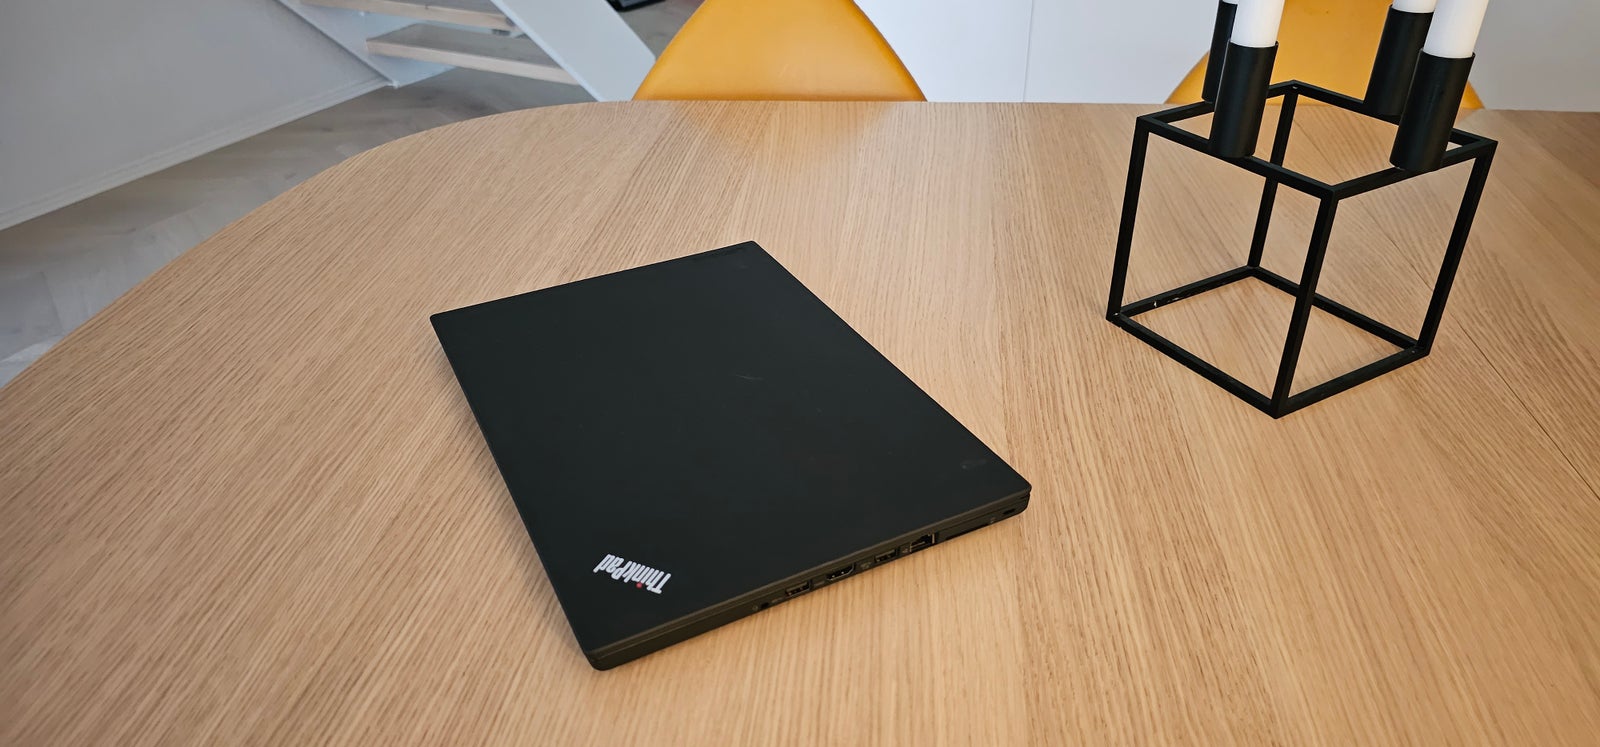 Lenovo ThinkPad T470 14', Intel Core i5-6300U 2.4Ghz max